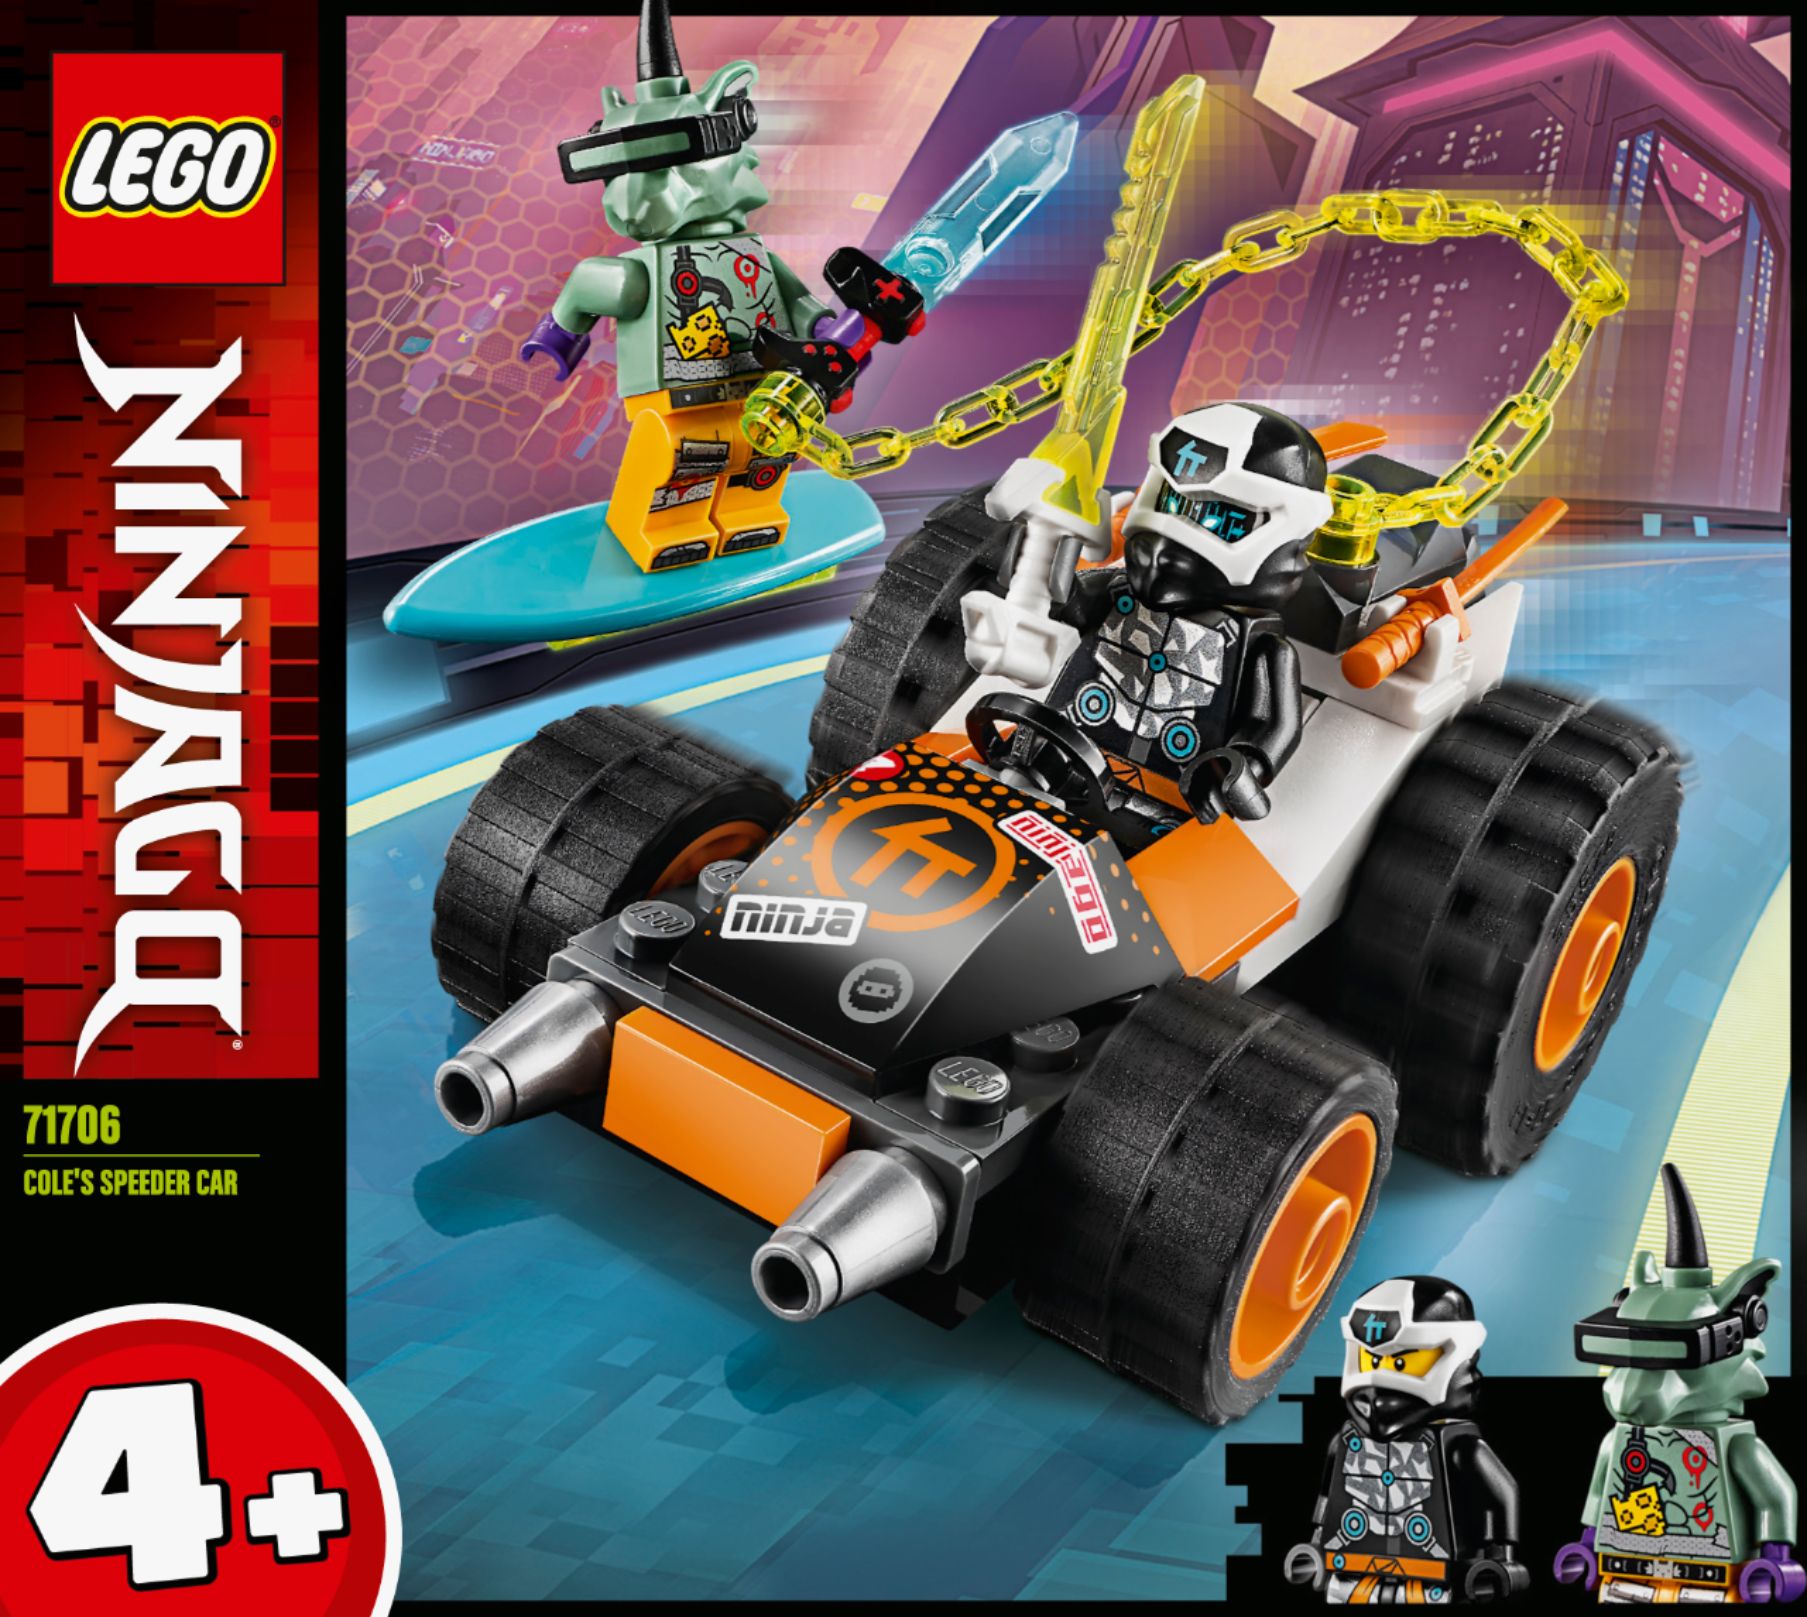 LEGO Cole/'s Speeder Car Ninjago for sale online 71706